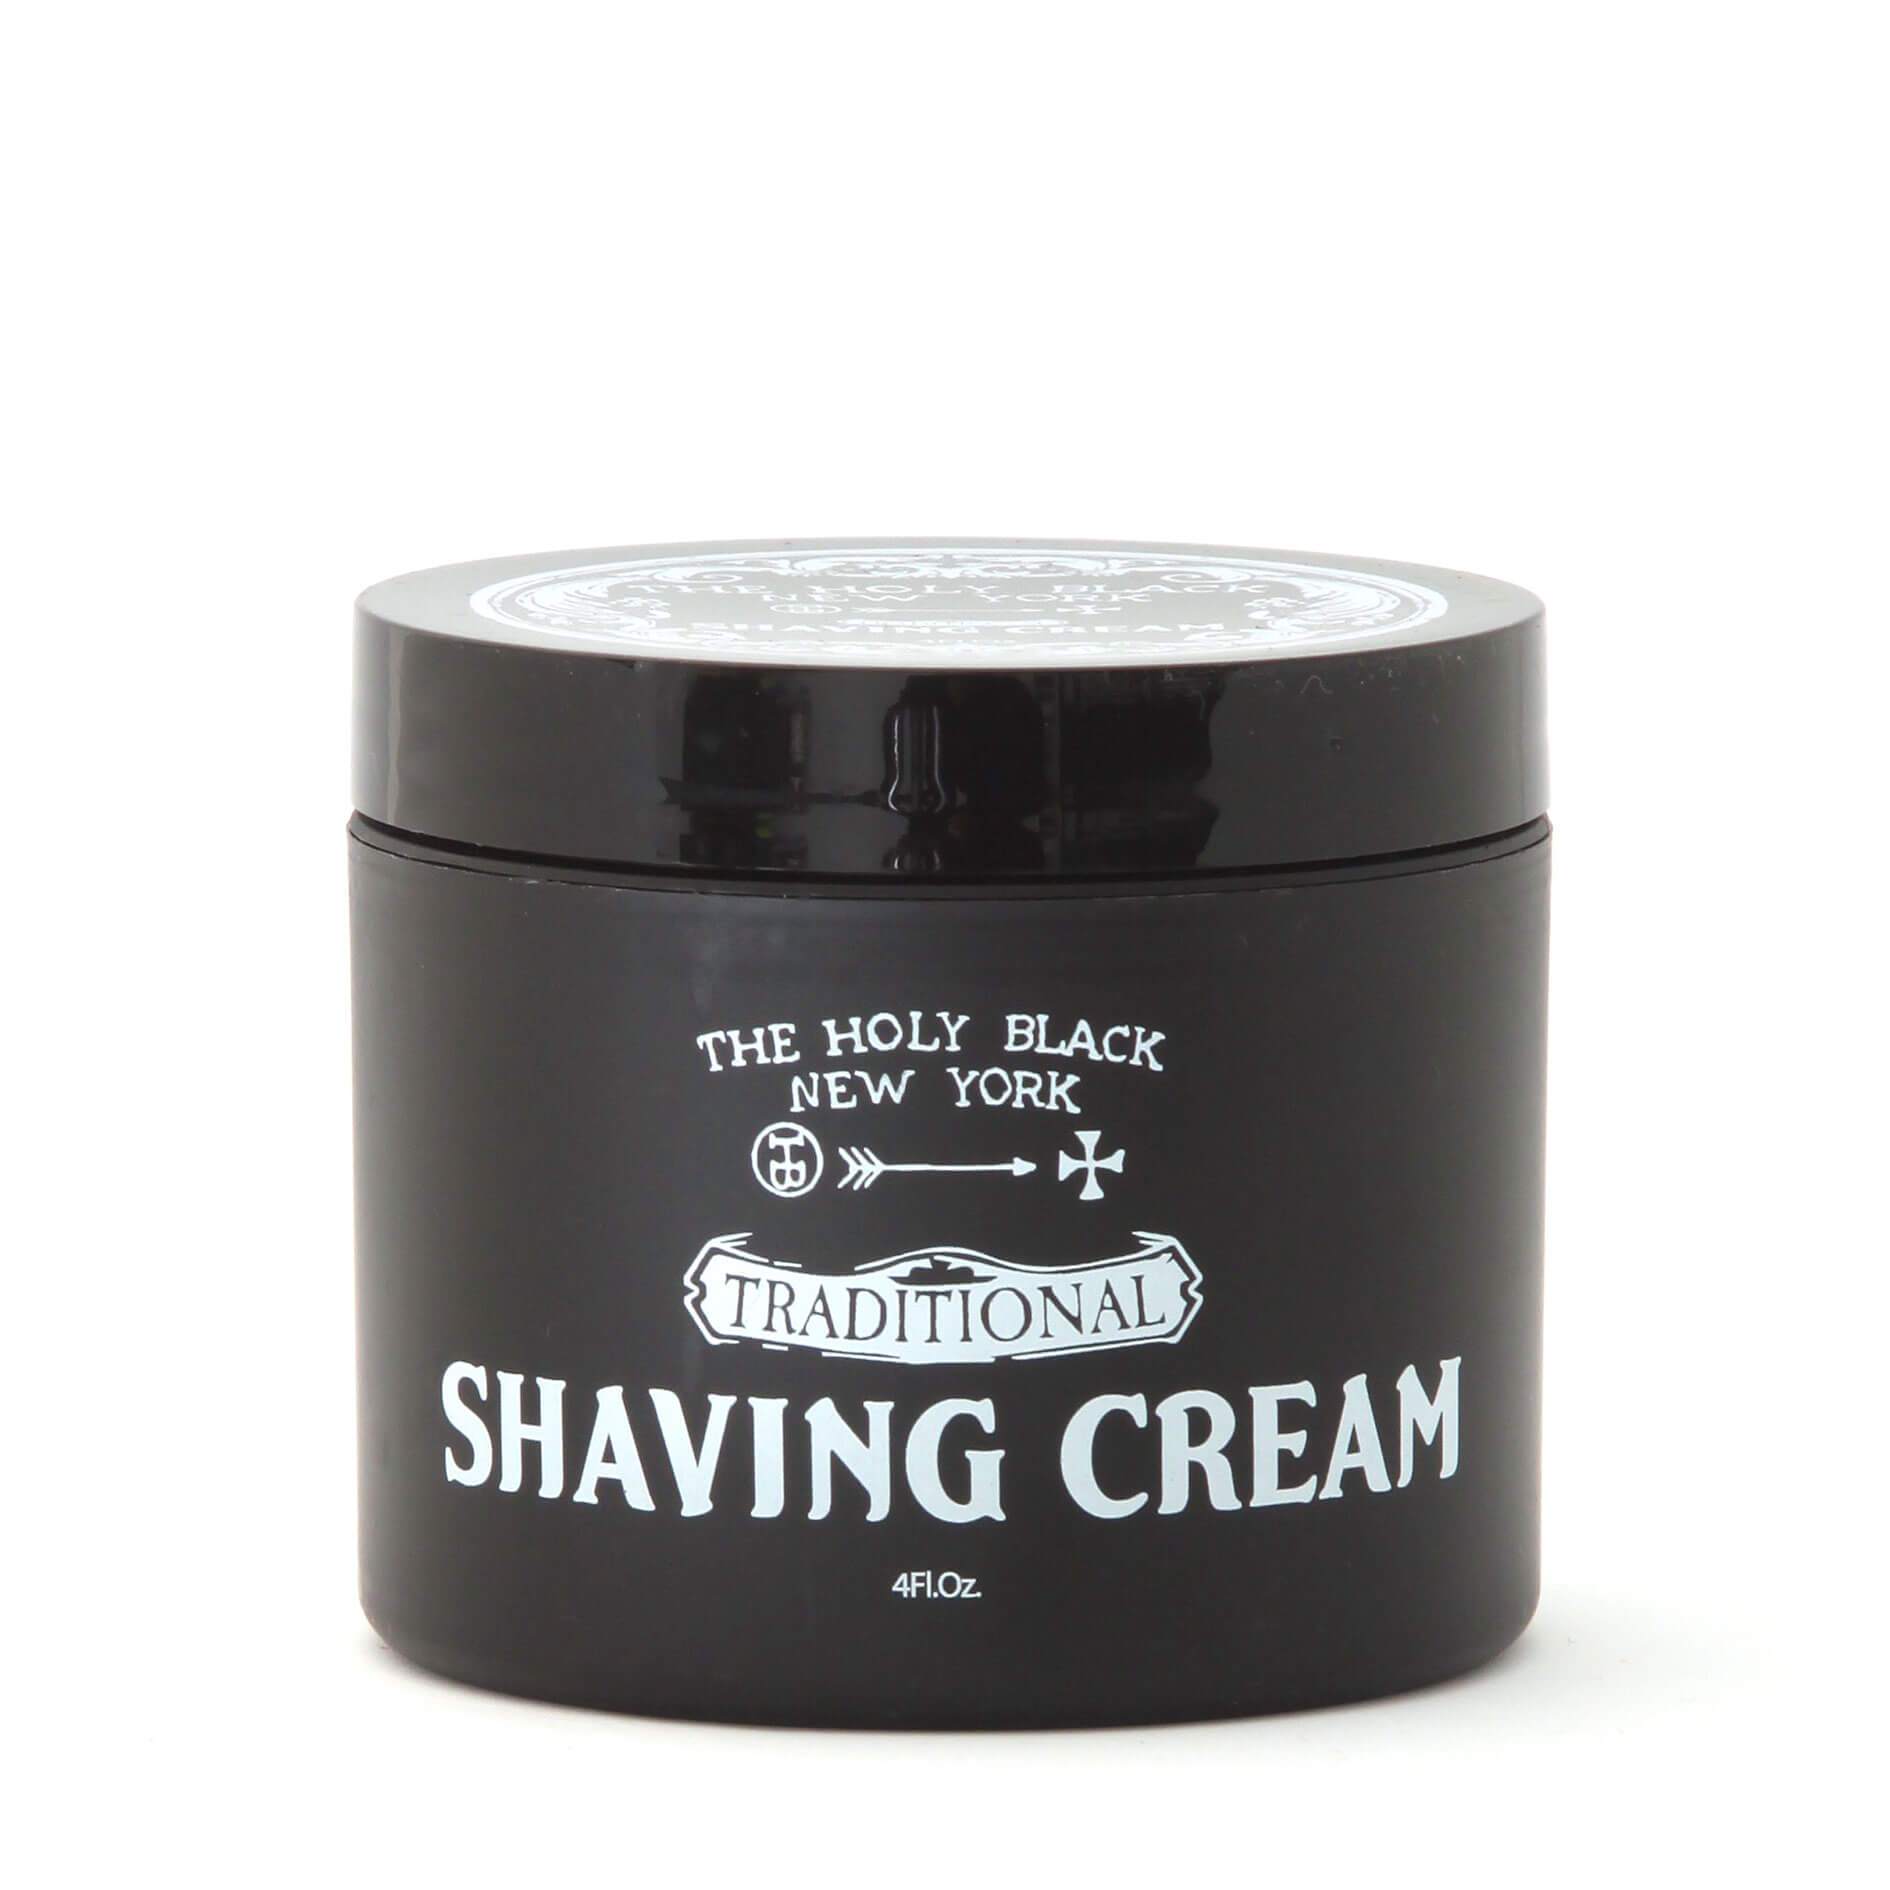 The Holy Black Shaving Cream